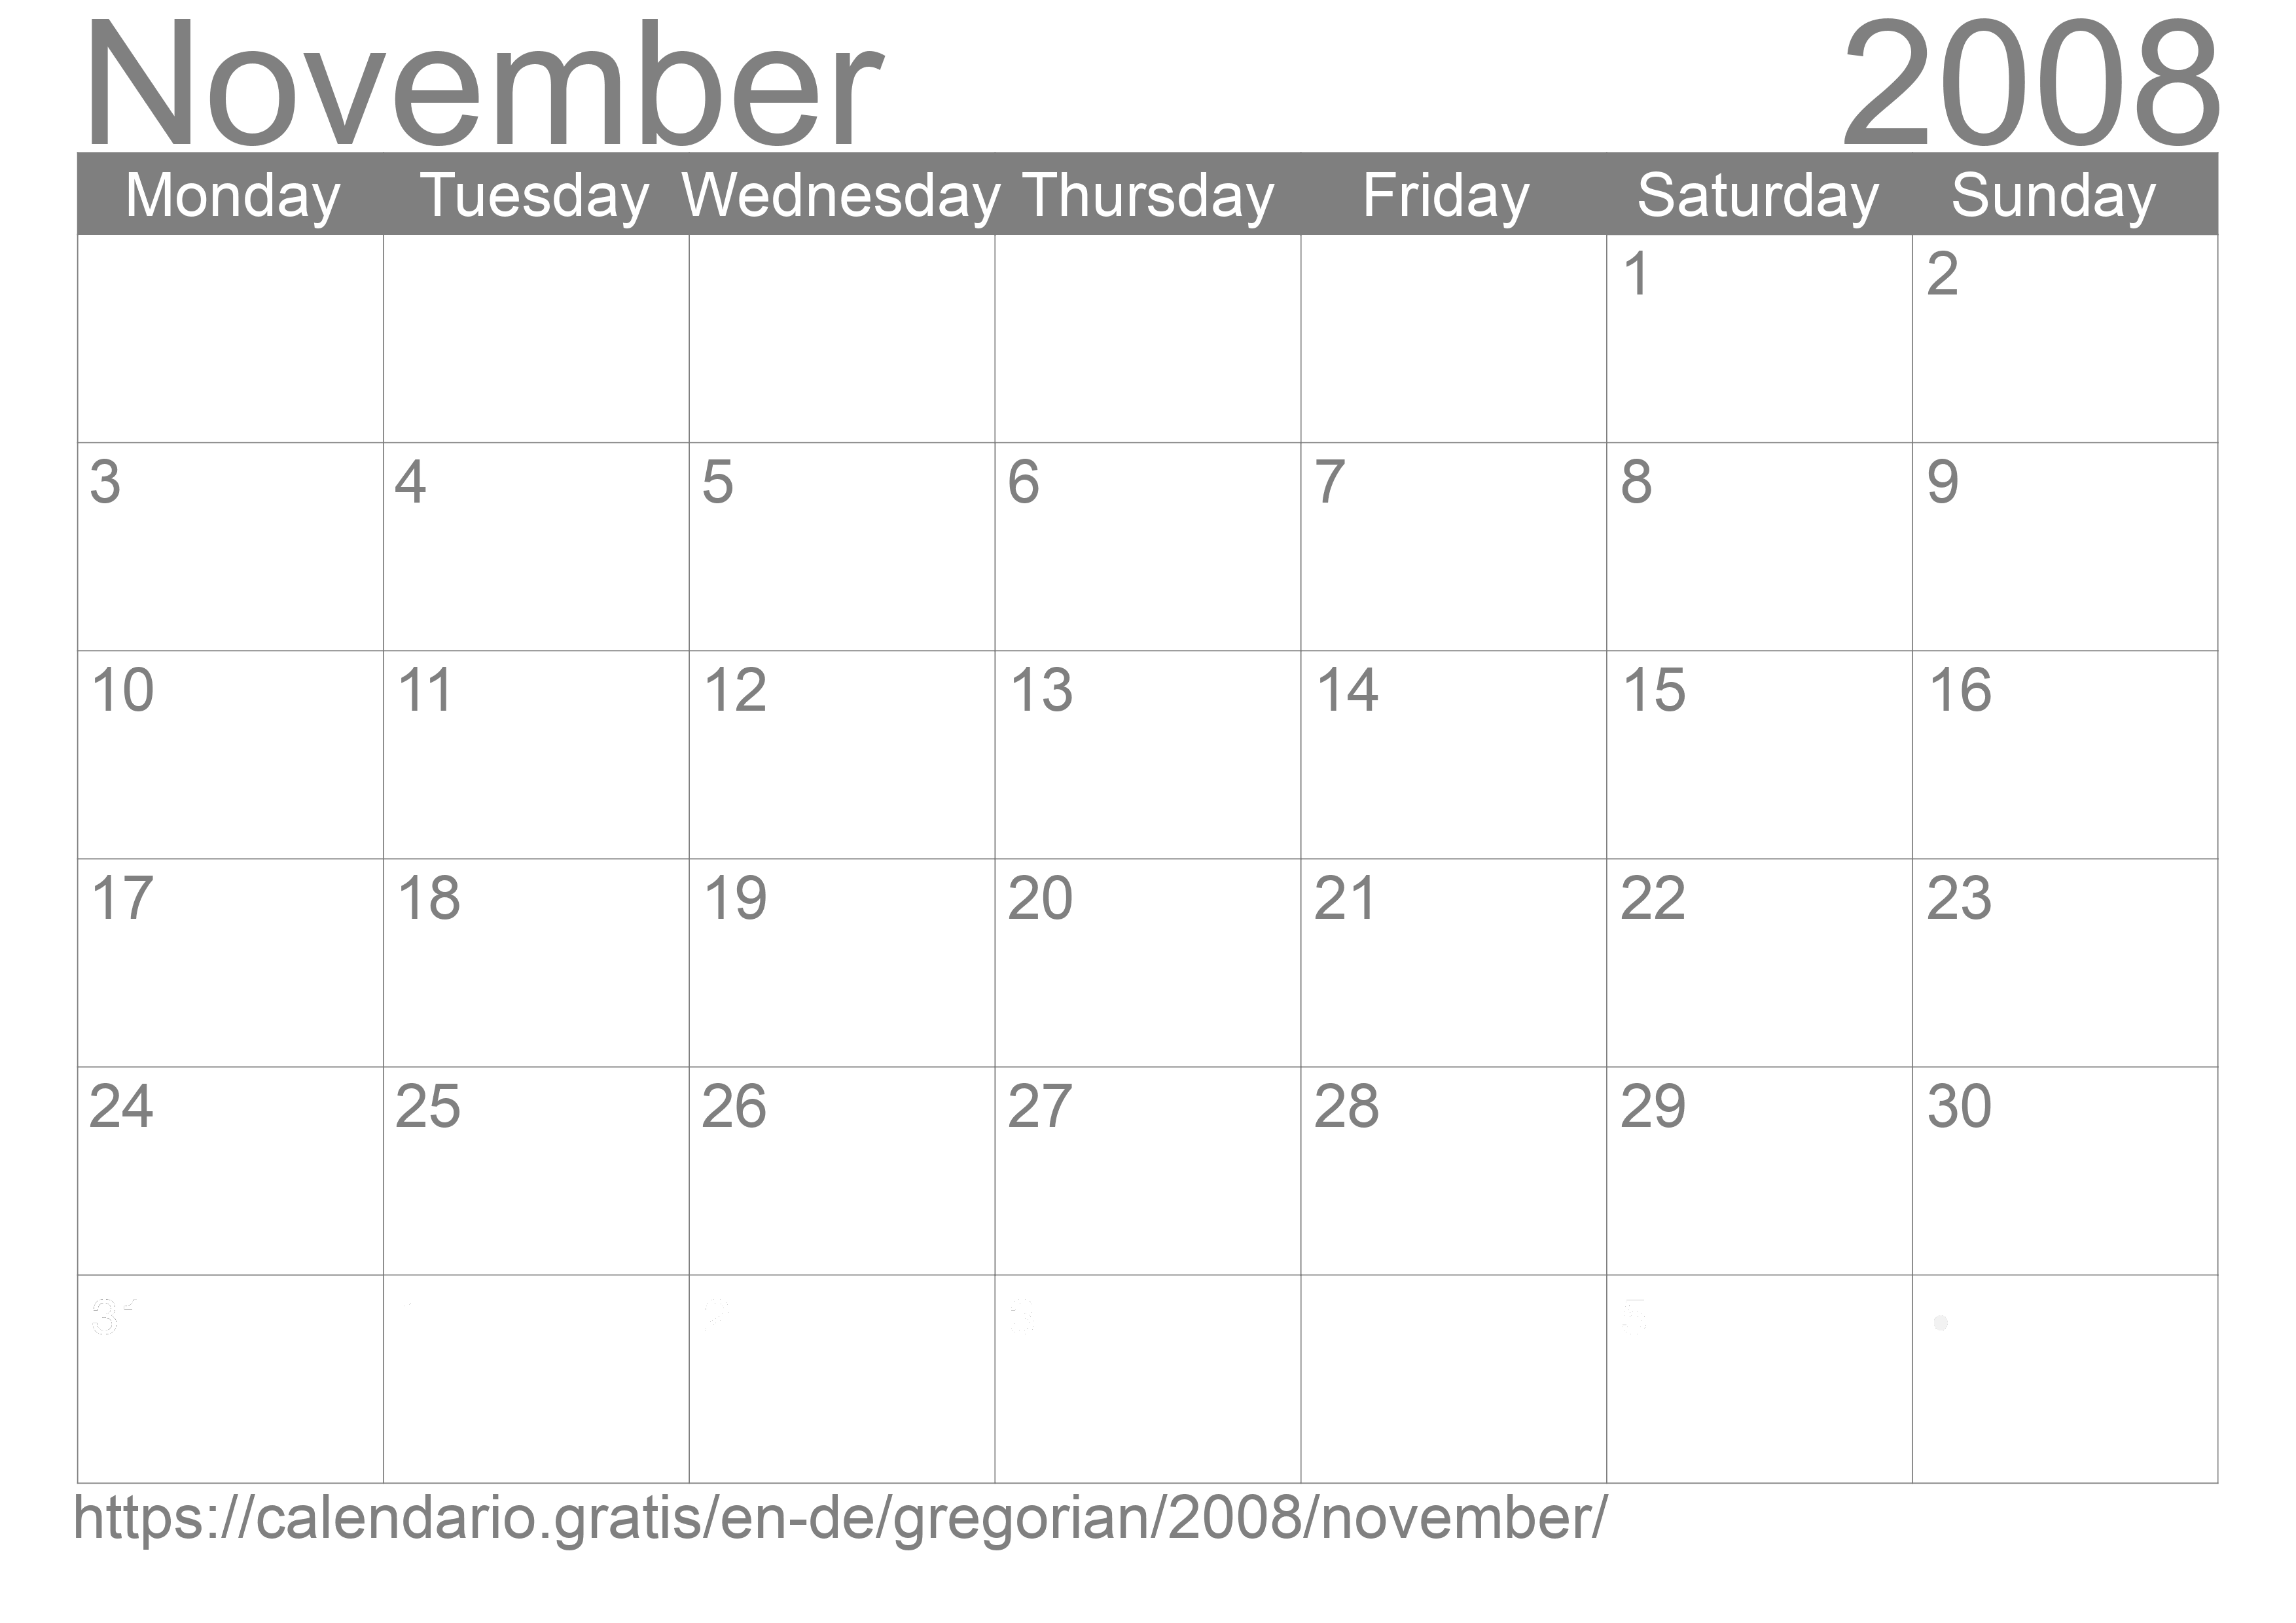 Calendar November 2008 to print